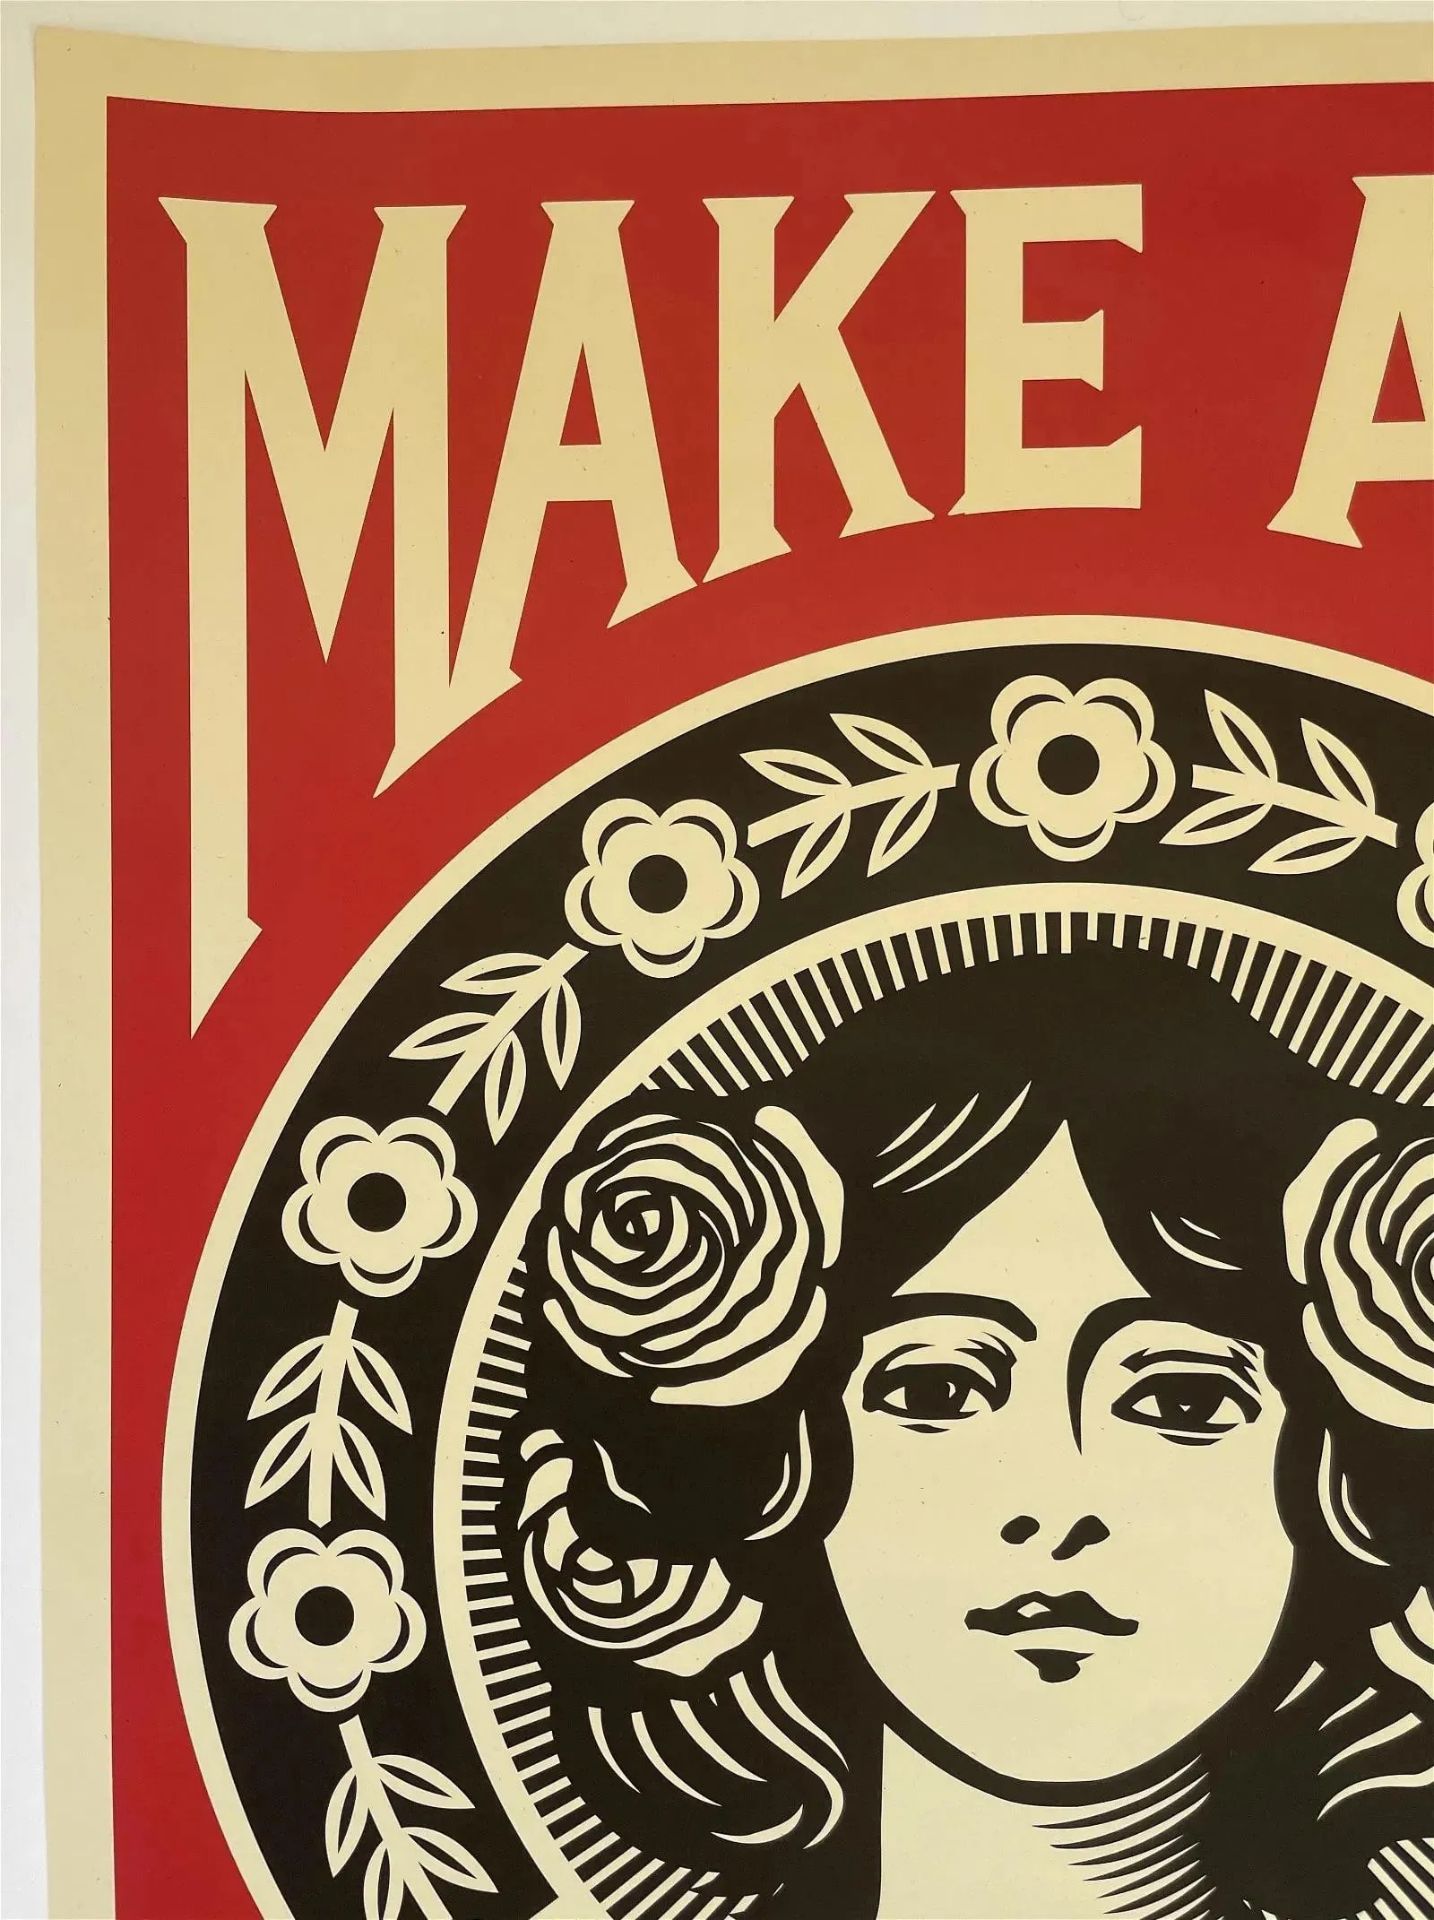 Shepard Fairey Signed "Make Art Not War" Offset Lithograph - Image 4 of 7